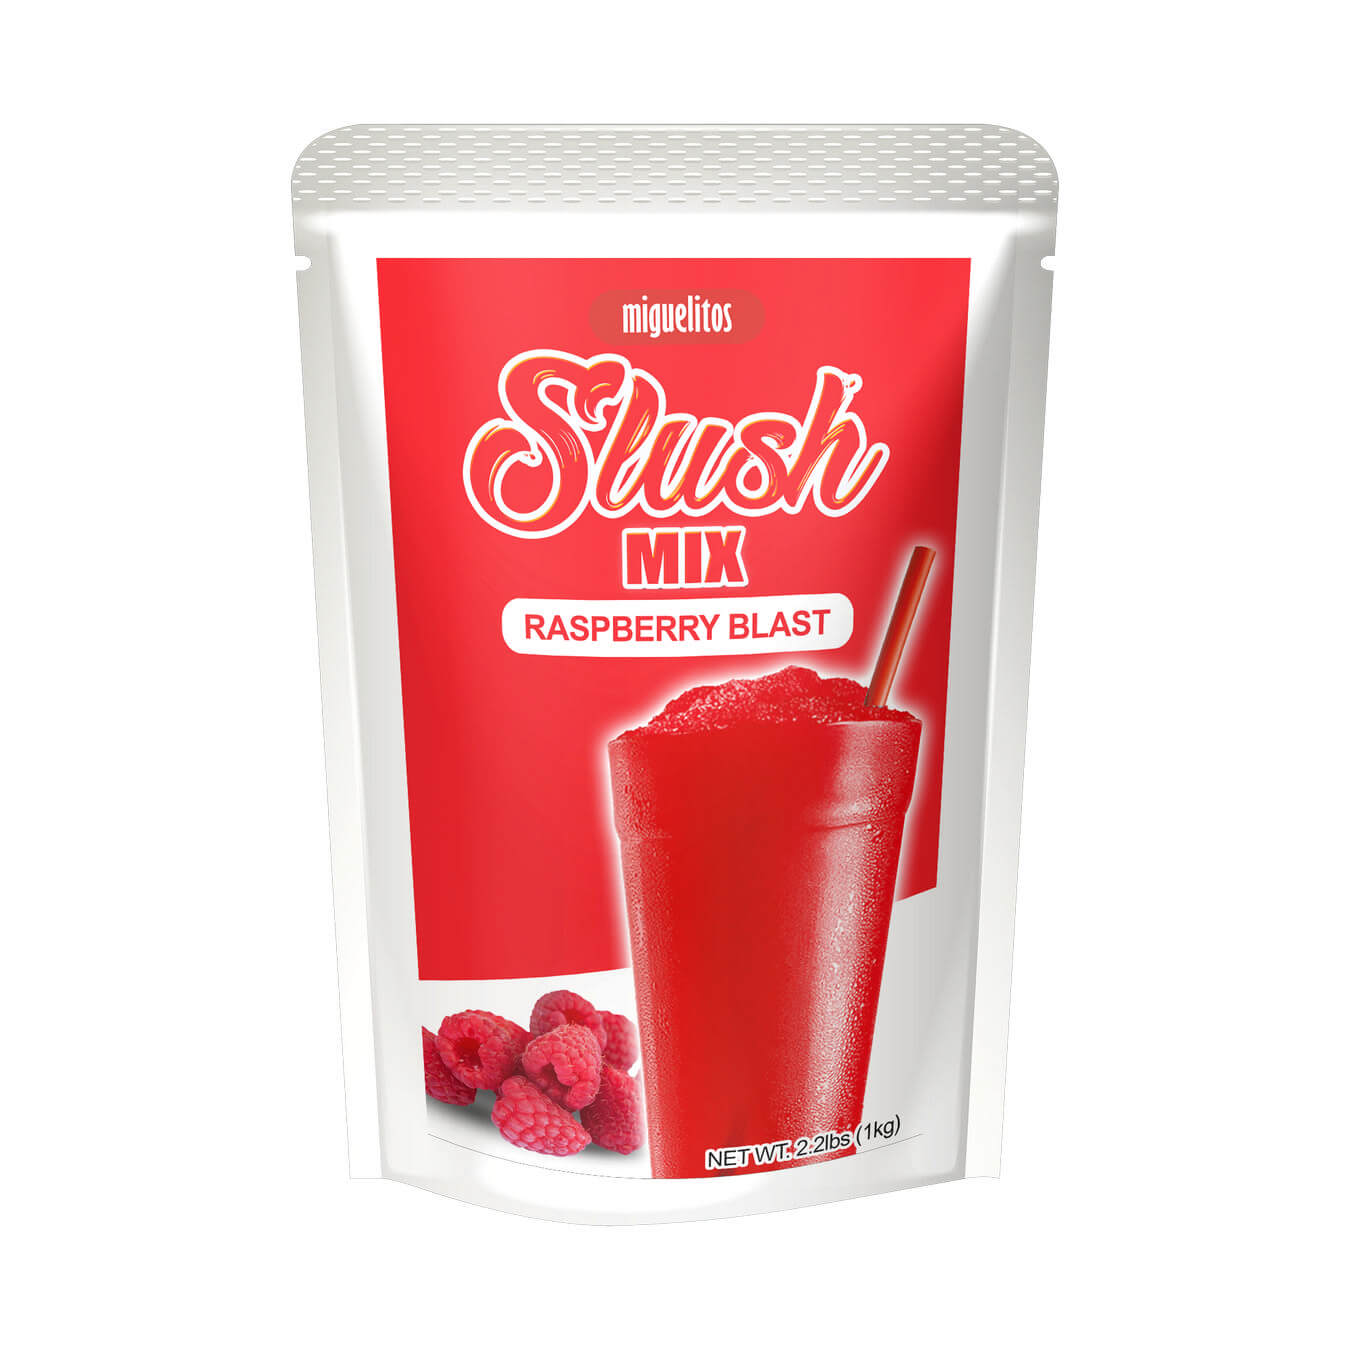 Slush Mix Raspberry blast